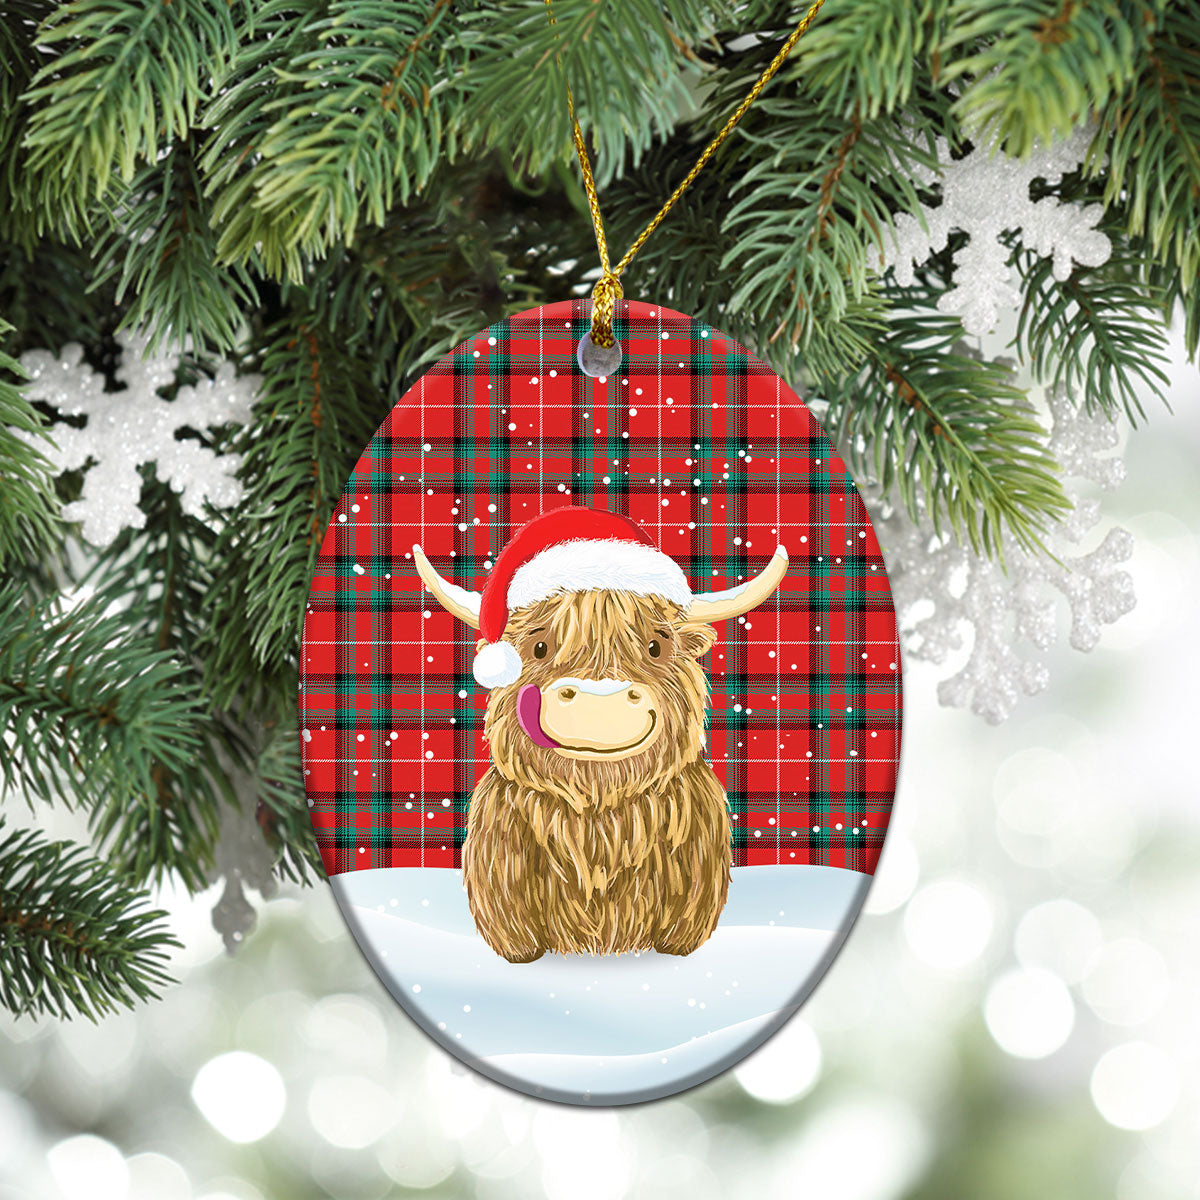 Stewart (Stuart) of Bute Tartan Christmas Ceramic Ornament - Highland Cows Style